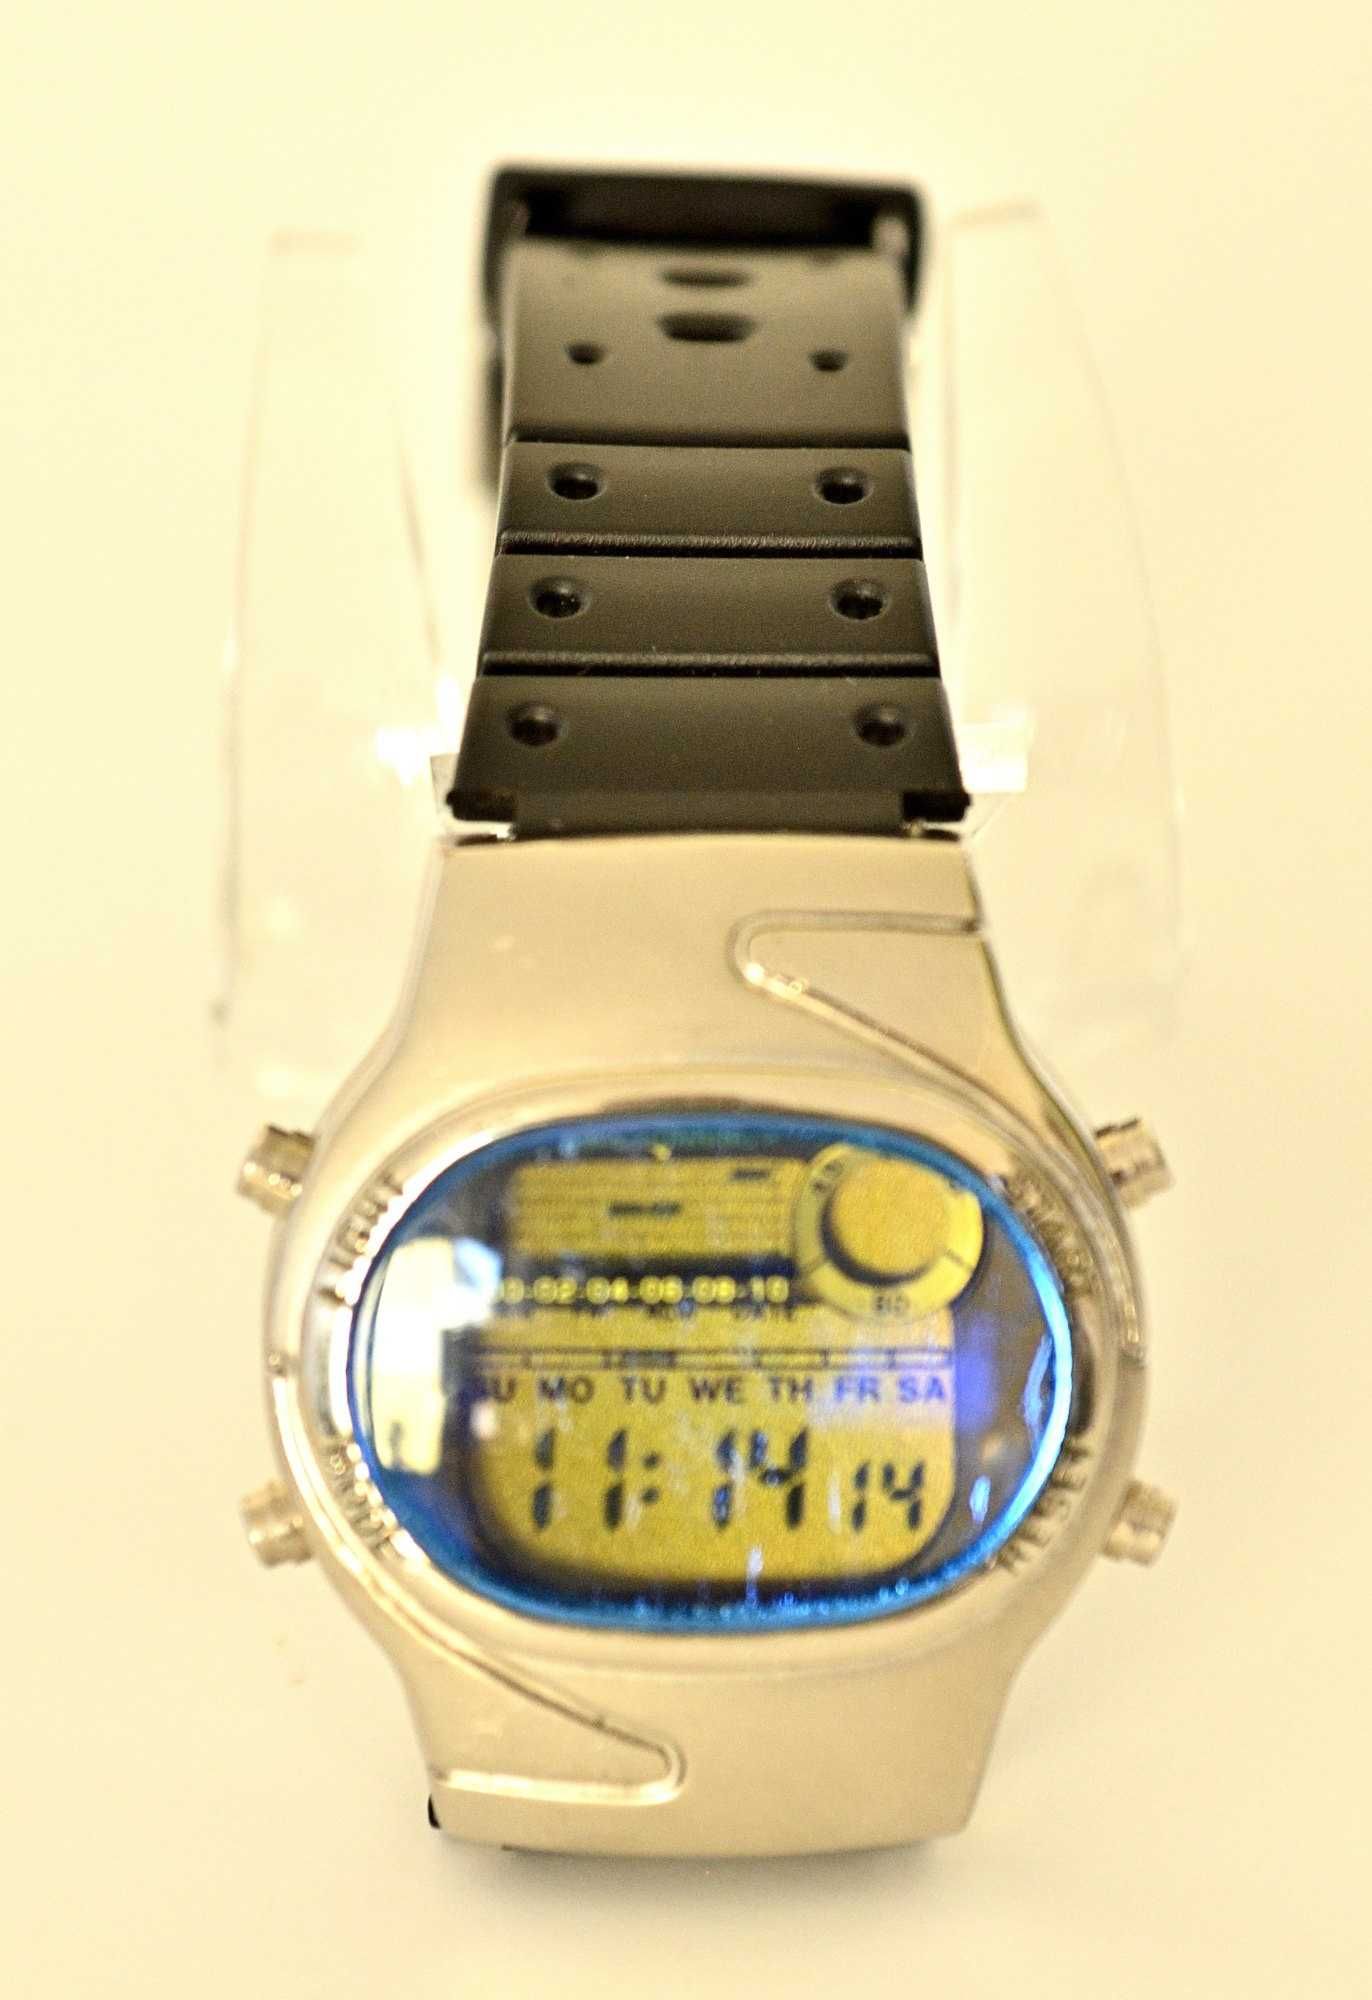 Zegarek SHARK alarm stoper podświetlenie